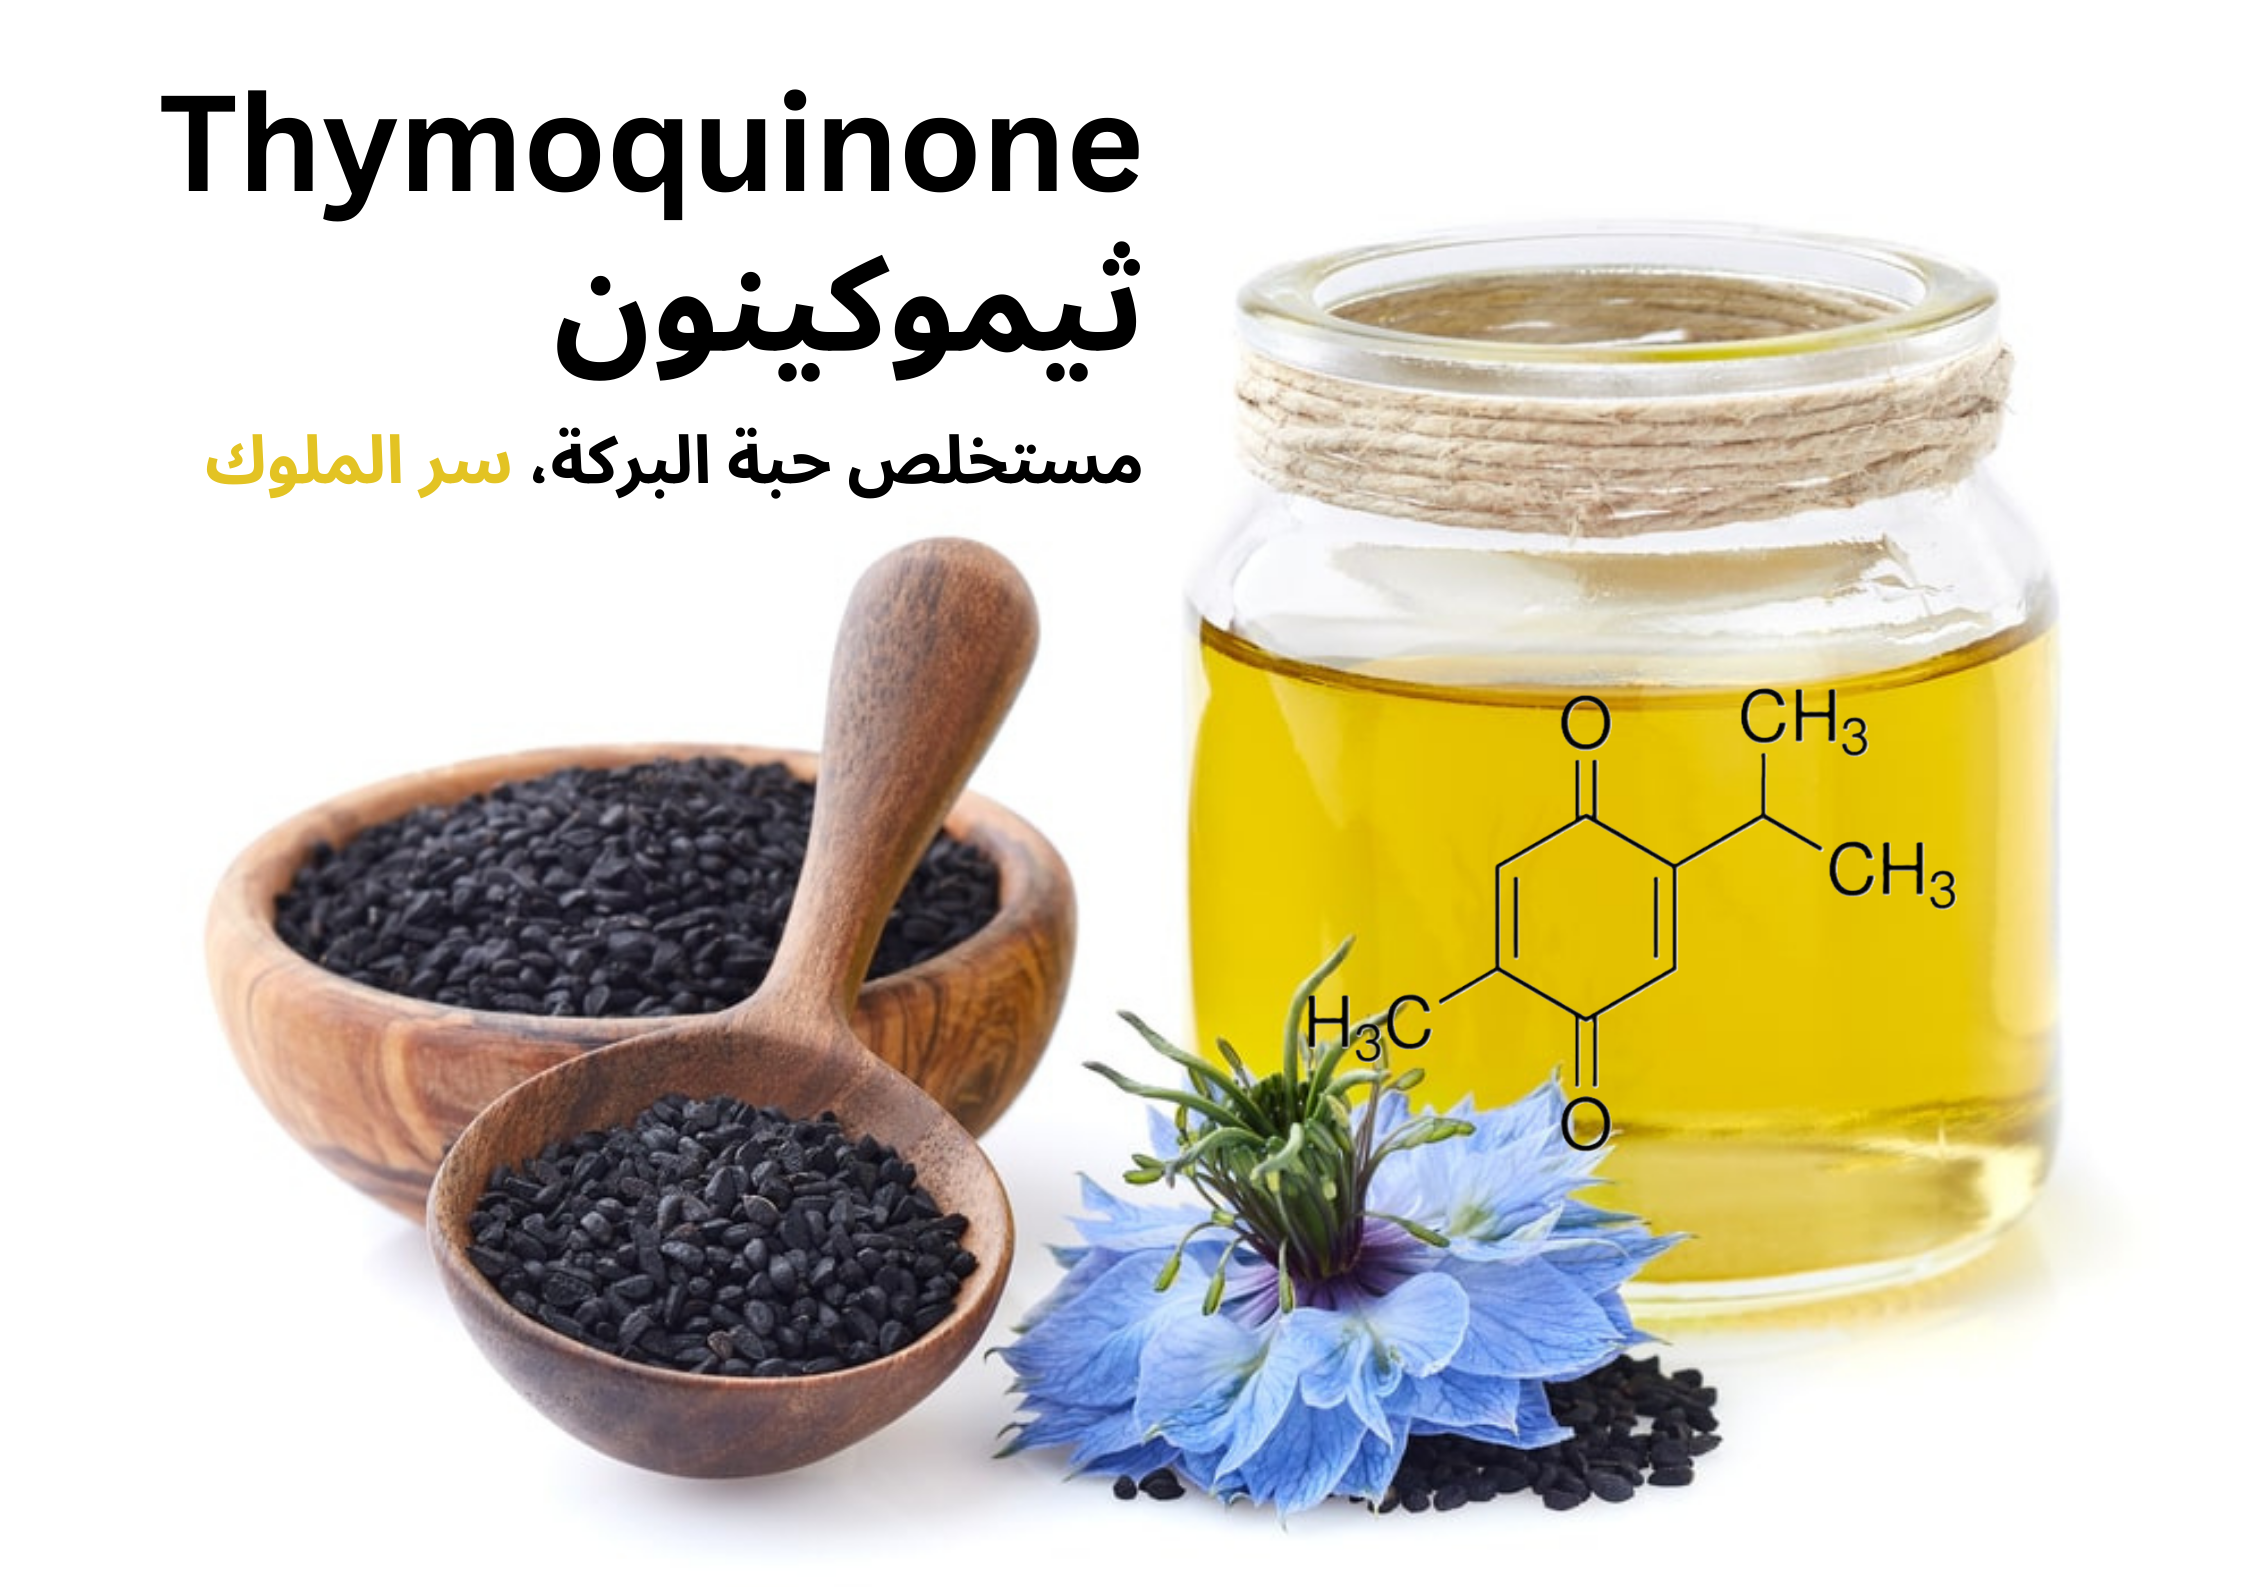 Thymoquinone ثيموكينون